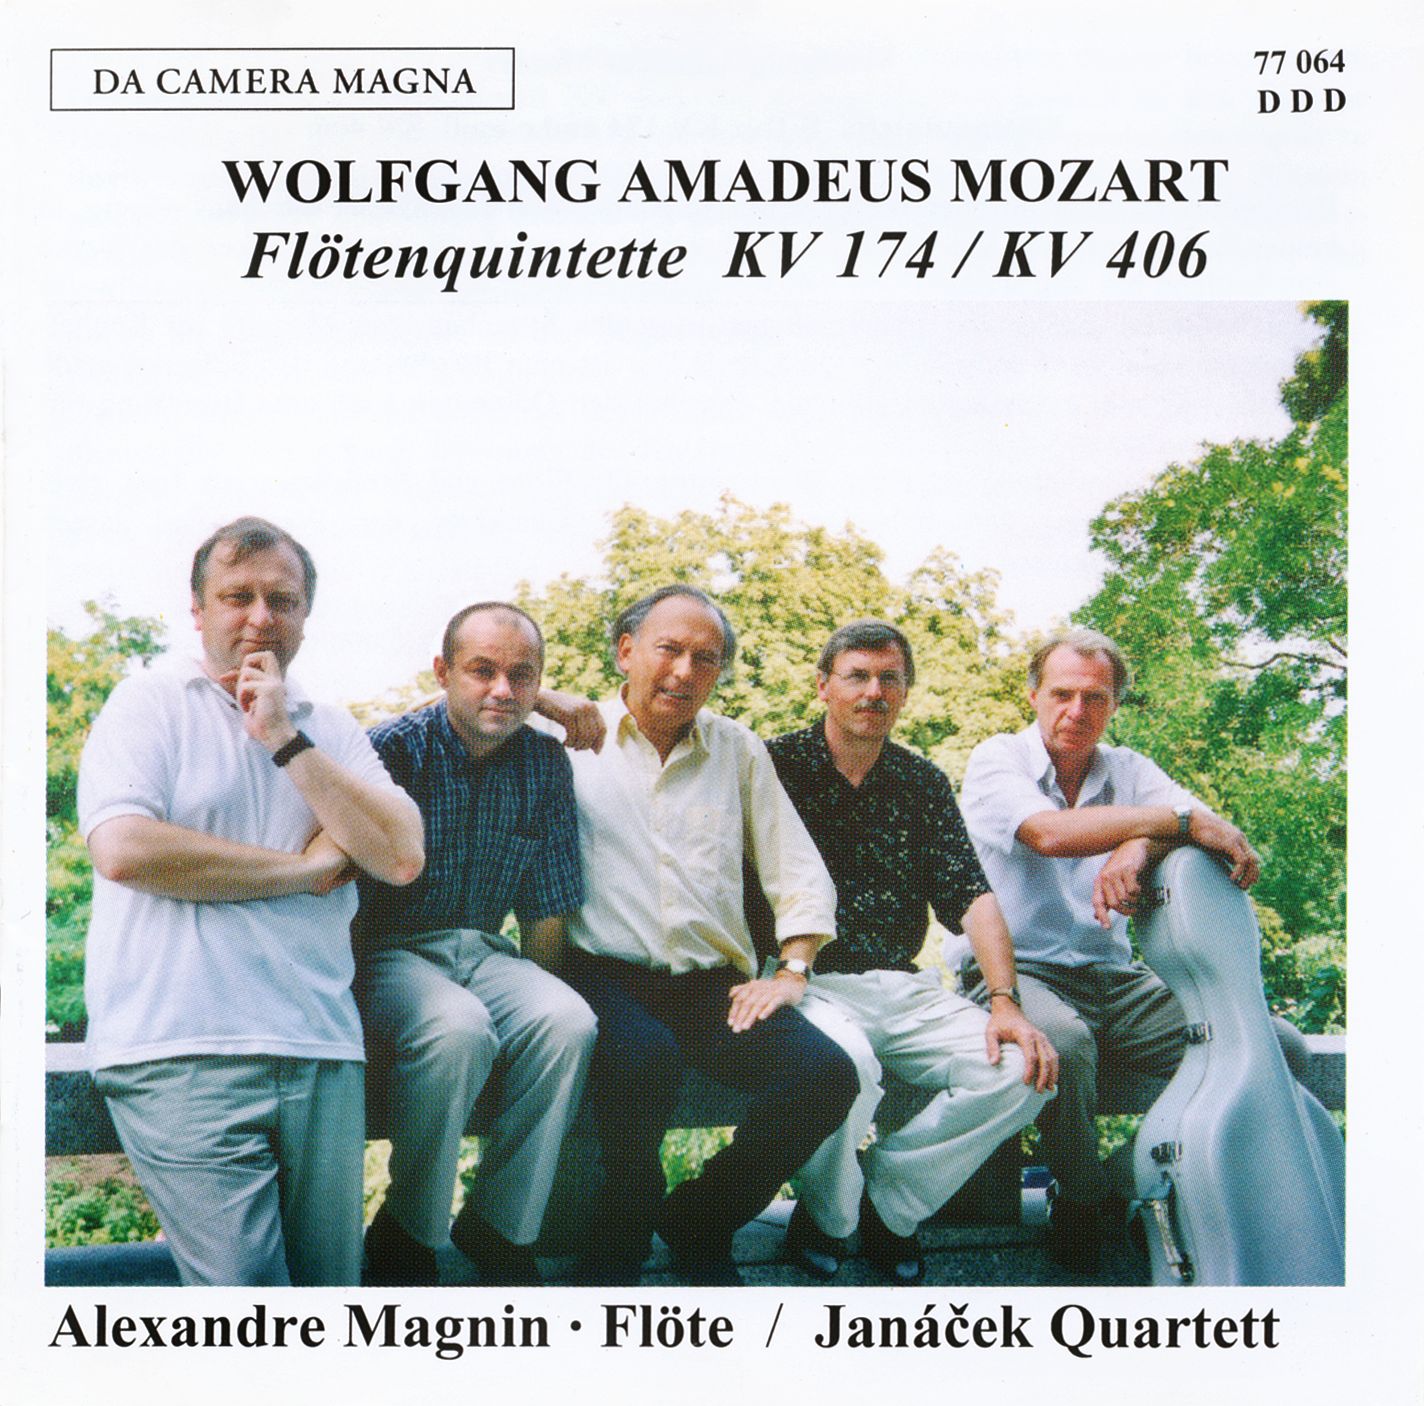 Wolfgang Amadeus Mozart  - Flötenquintette KV 174 / KV 406 / KV 285